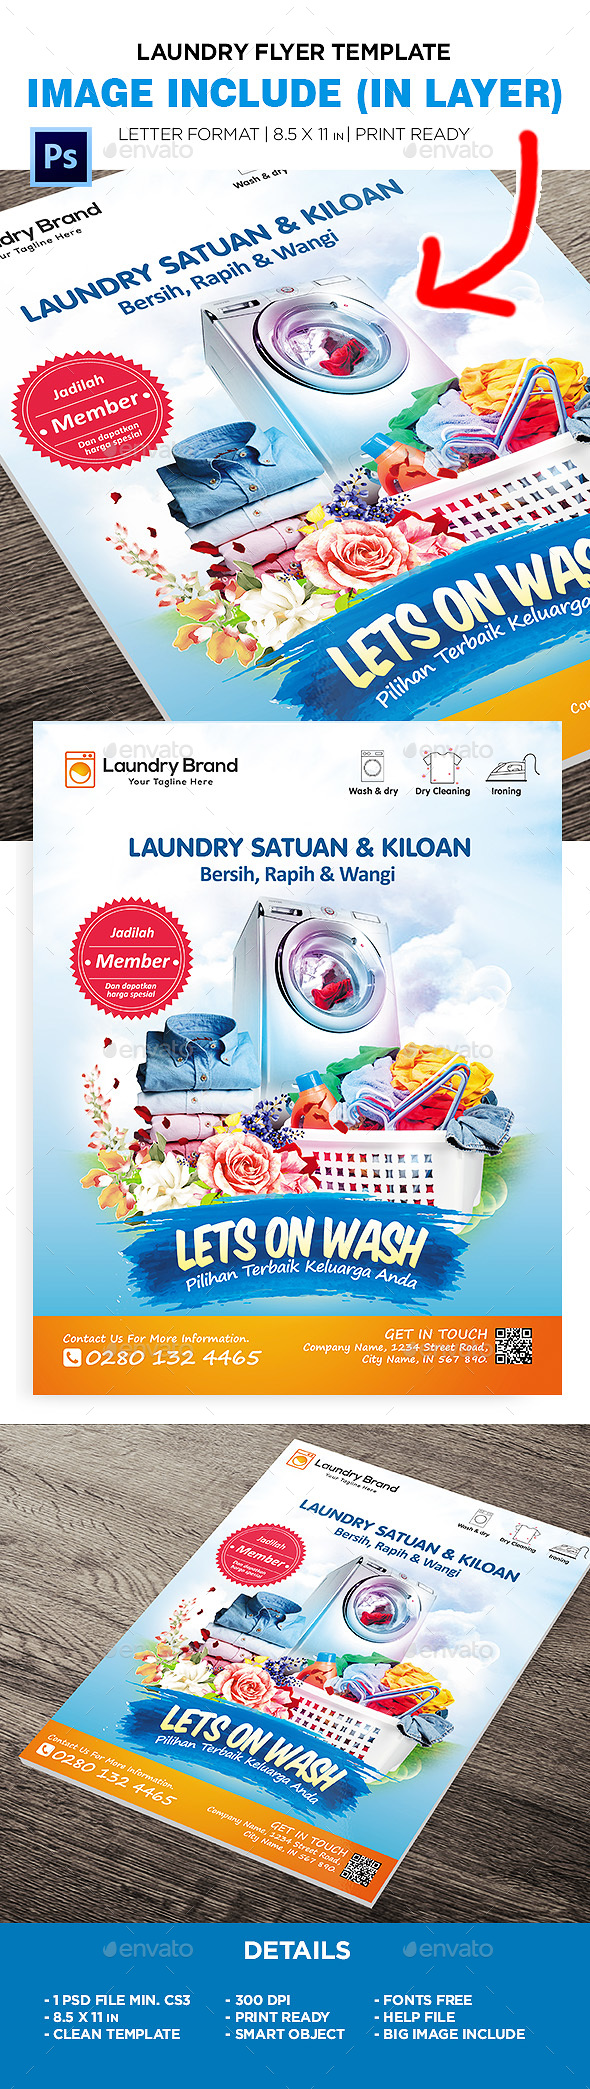 Laundry Flyer